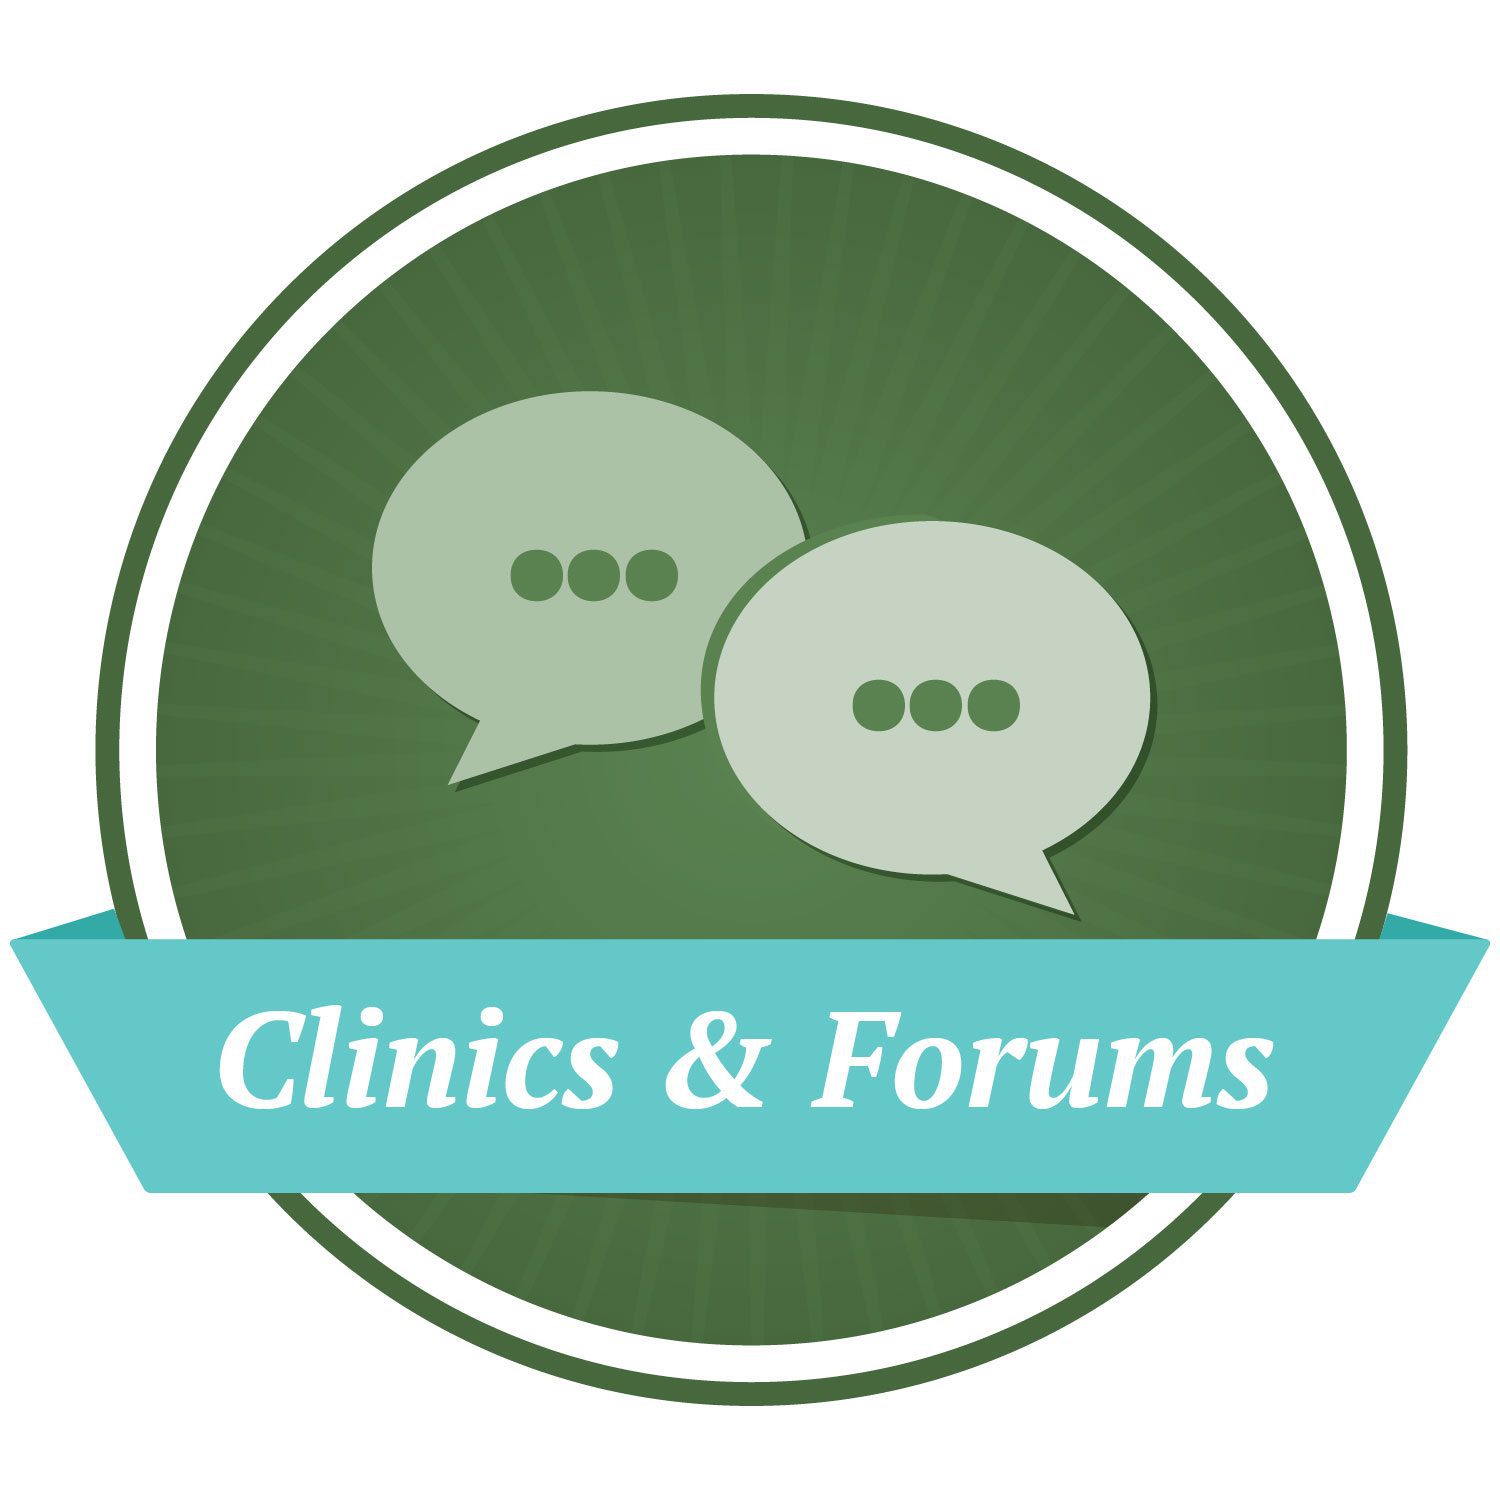 Clinics & Forums